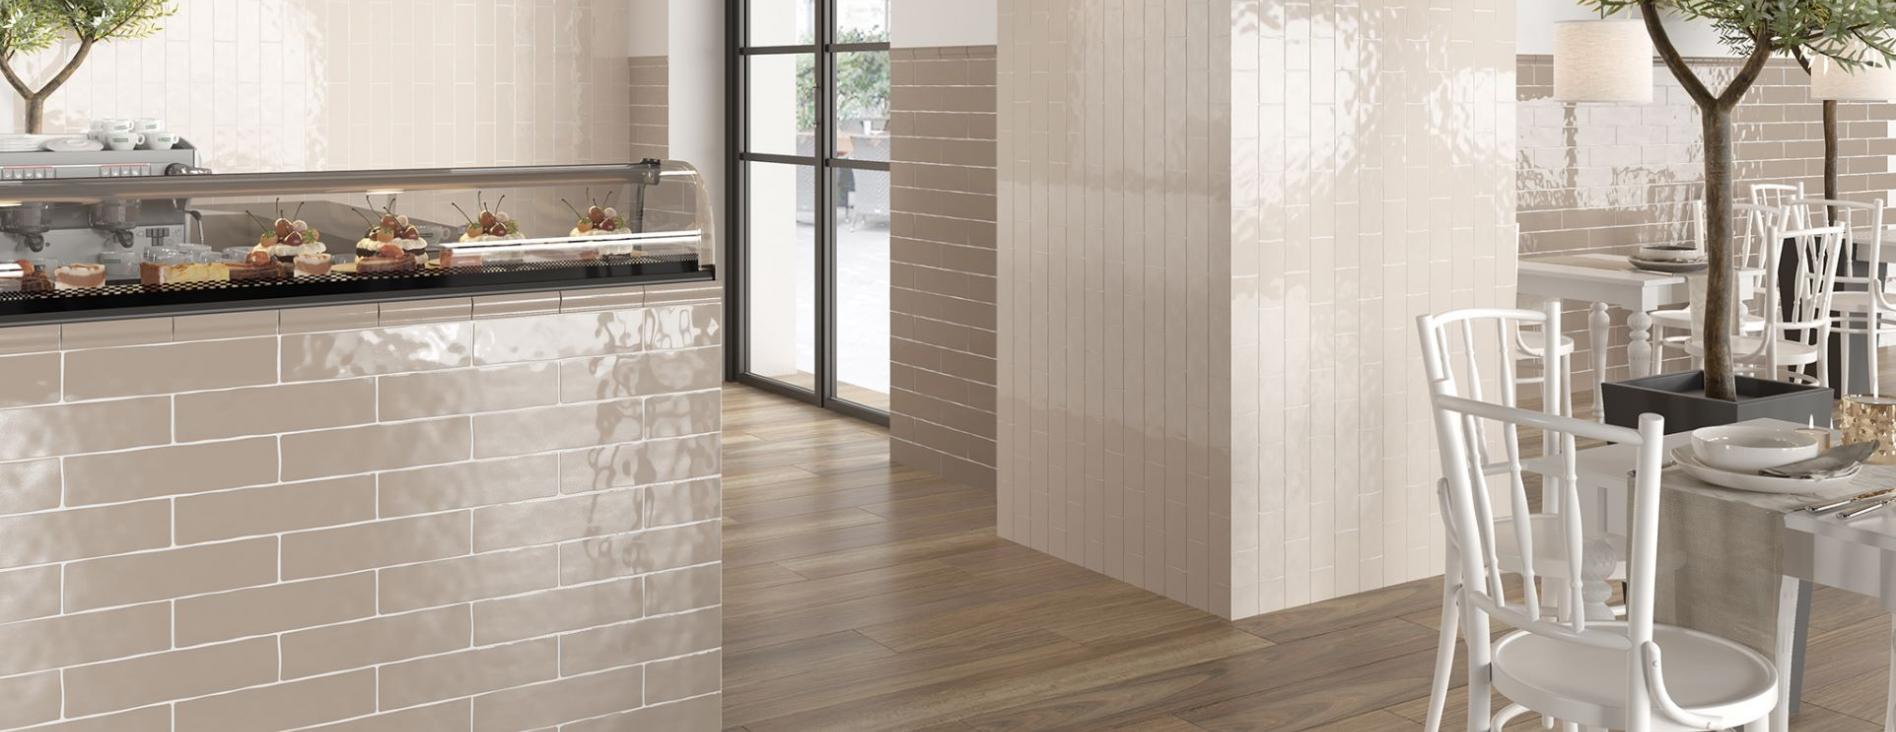 6x6 Cream Handmade Look Subway Ceramic Wall Tile for Bathroom Shower, Kitchen Backsplashes, Fireplace